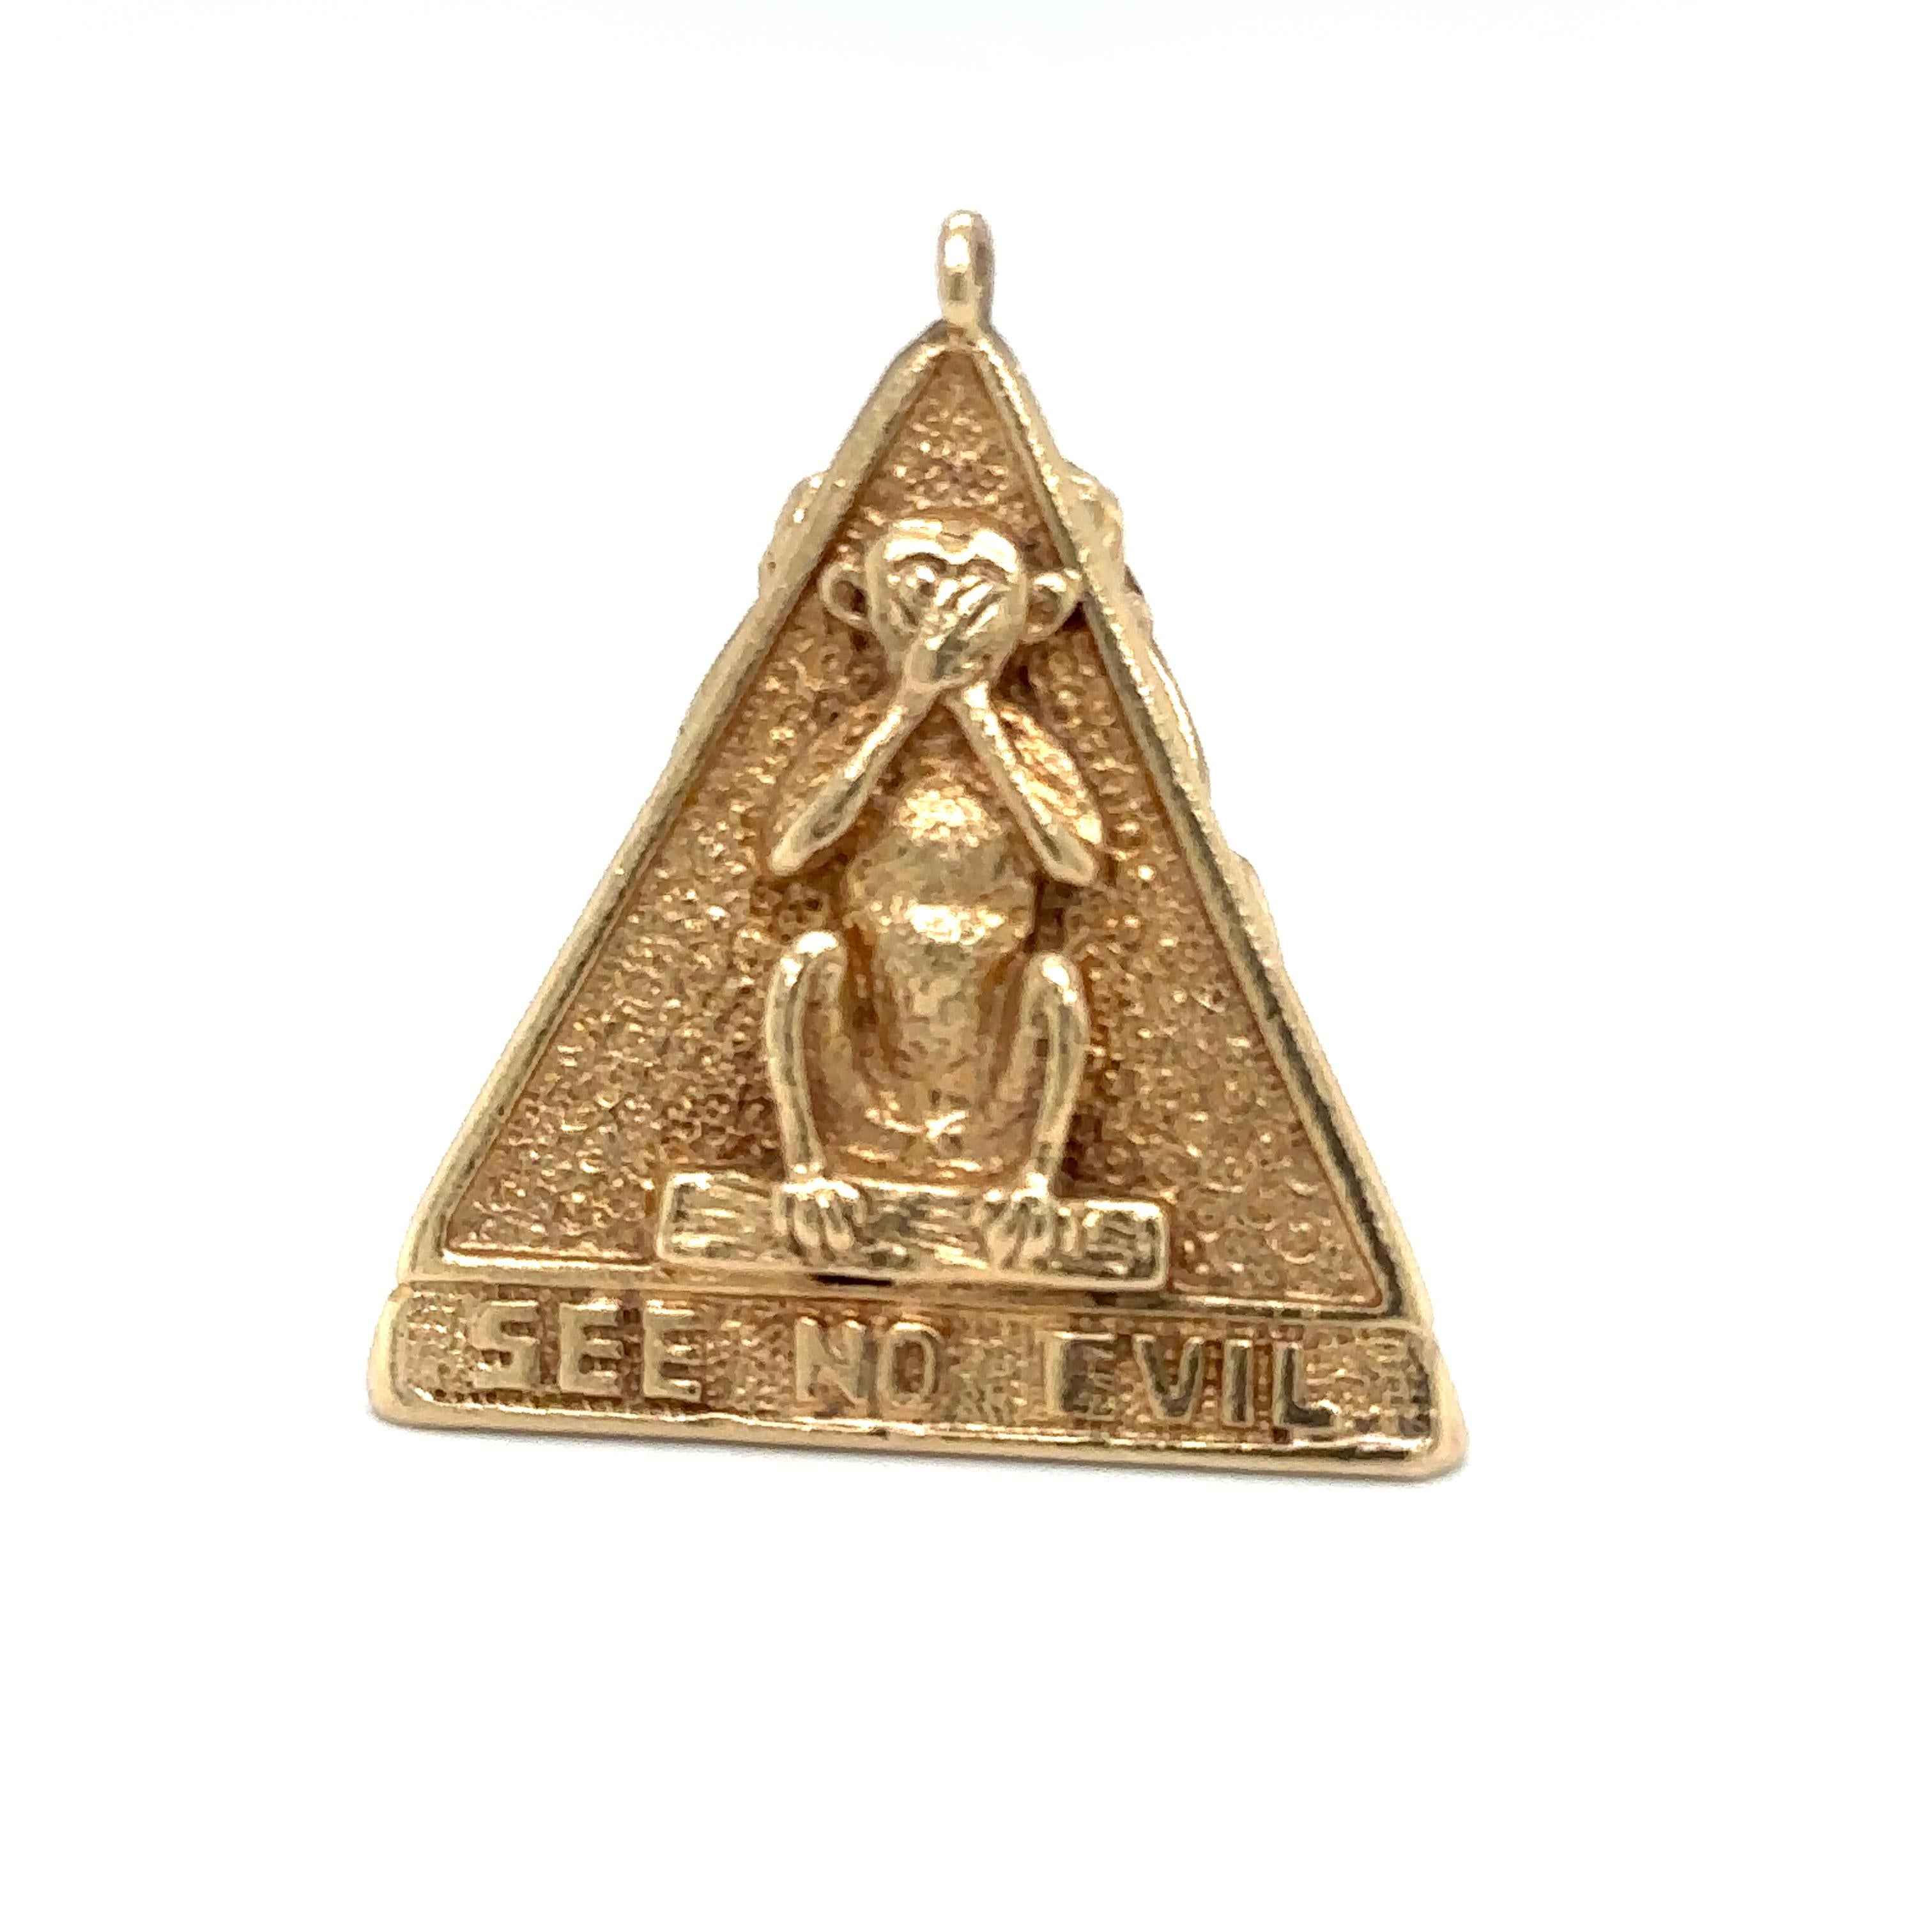 Modern 1980s Three Wise Monkeys Pyramid Pendant in 14 Karat Yellow Gold